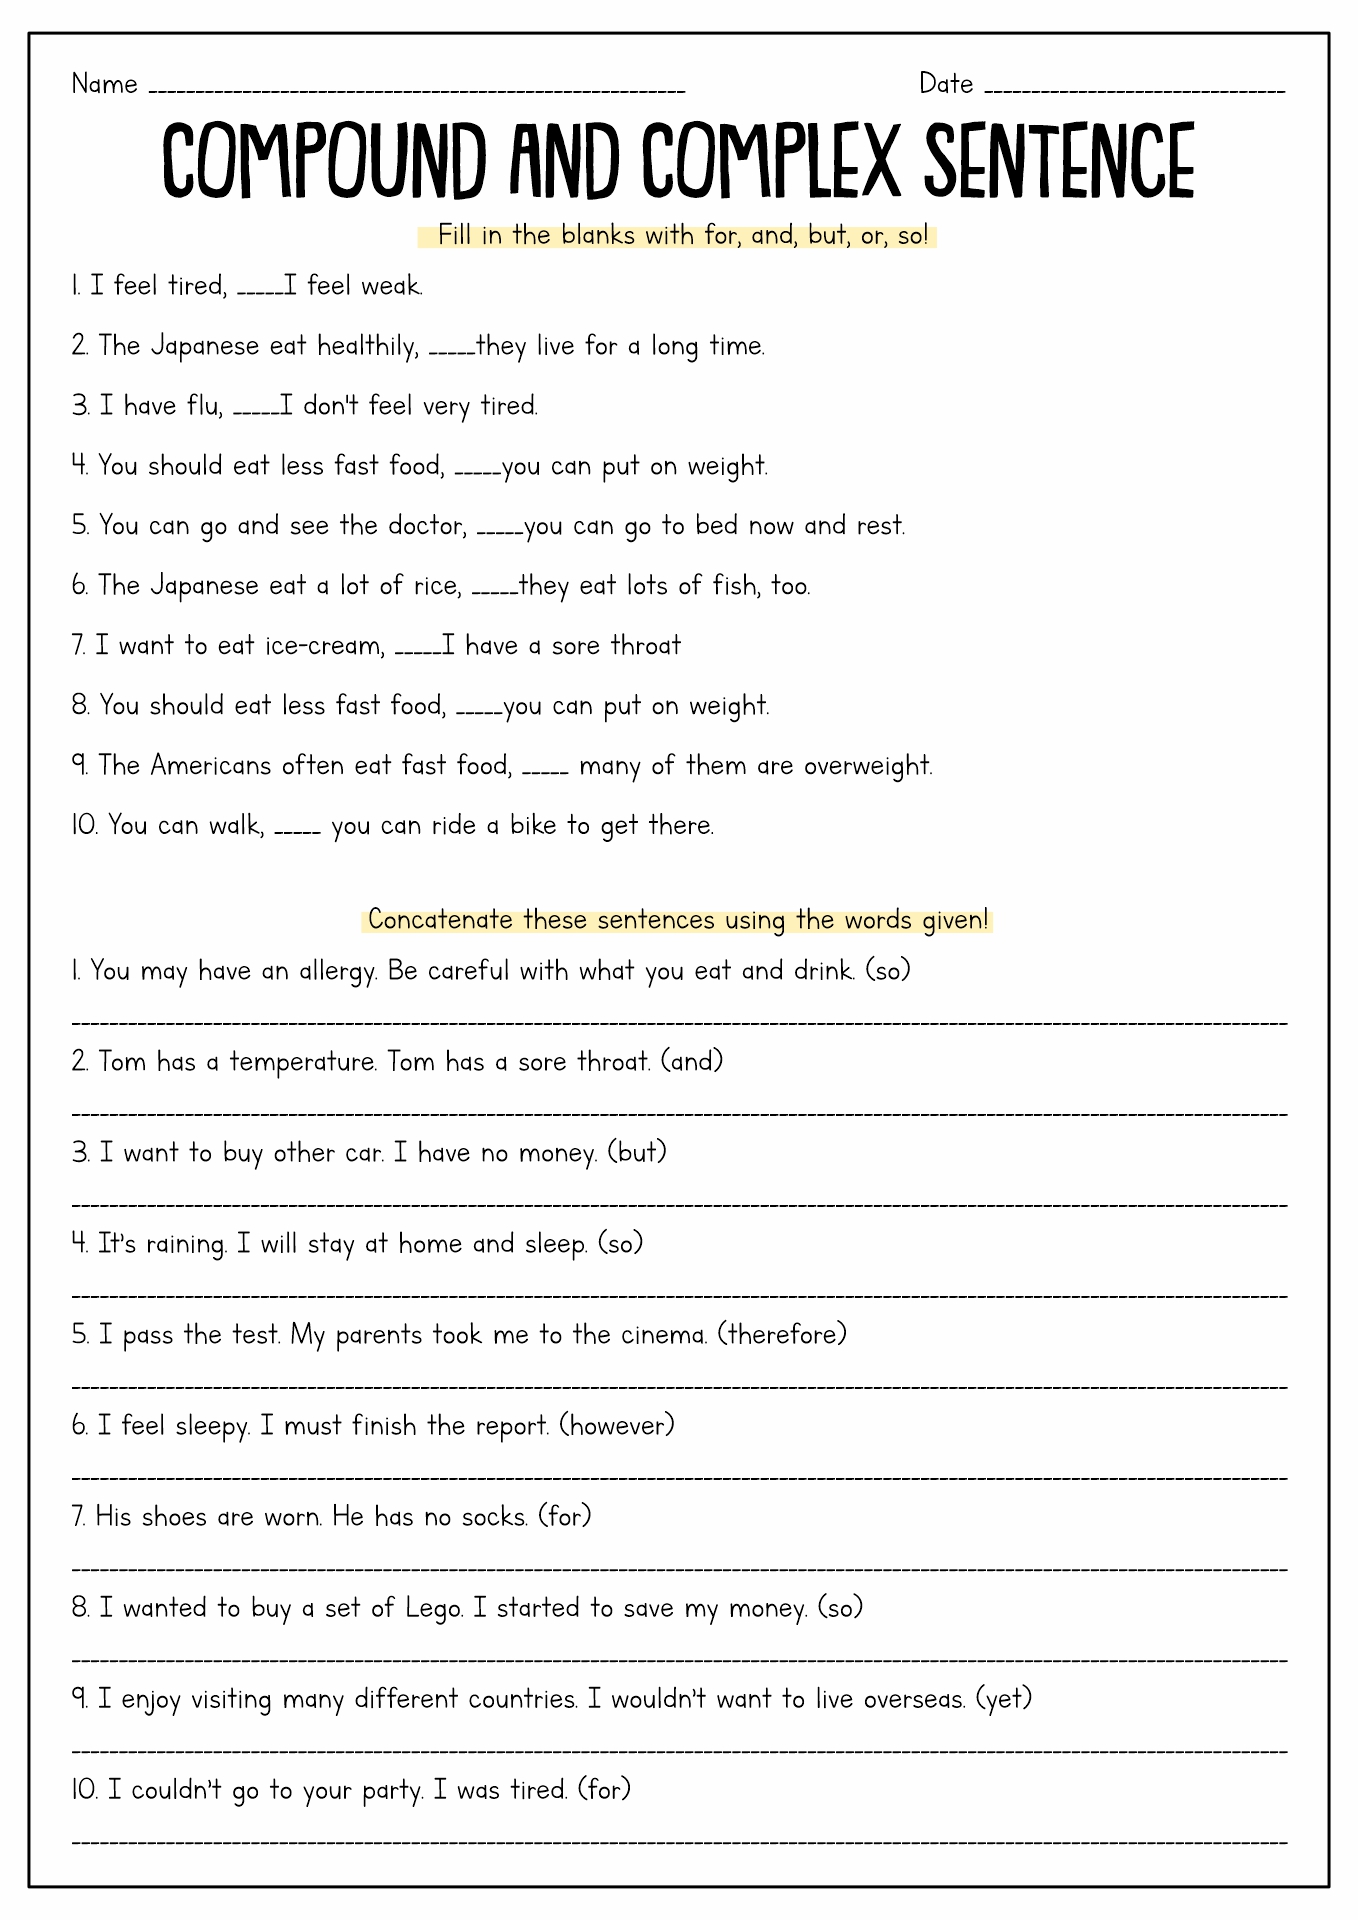 15 Best Images of Complex Sentence Worksheets 7th Grade ...